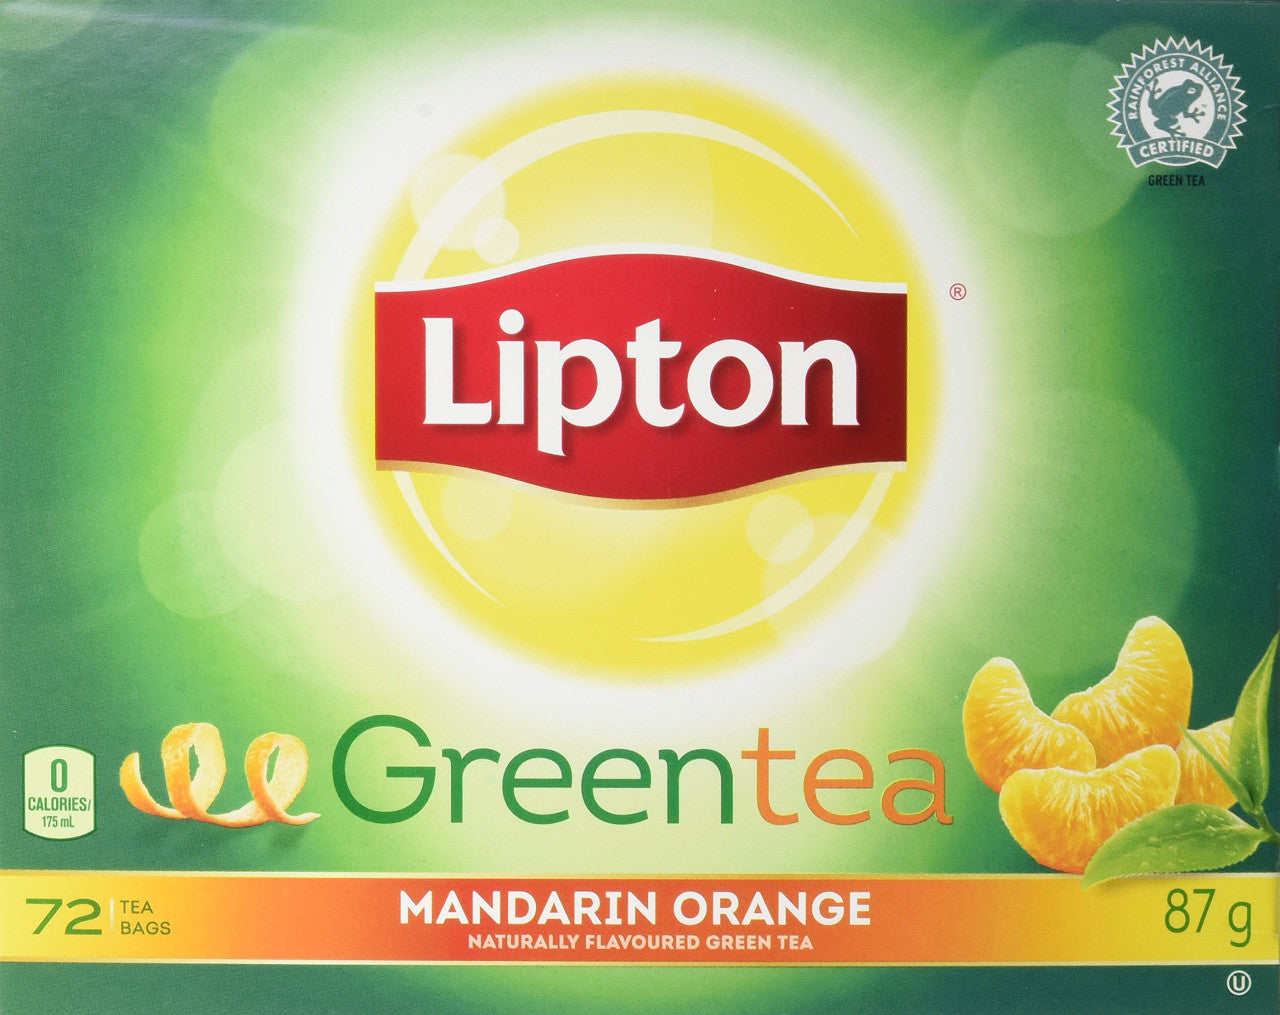 Lipton, Green Tea Orange Mandarin Tea, (72 Tea Bags) 87g, {Imported from Canada}